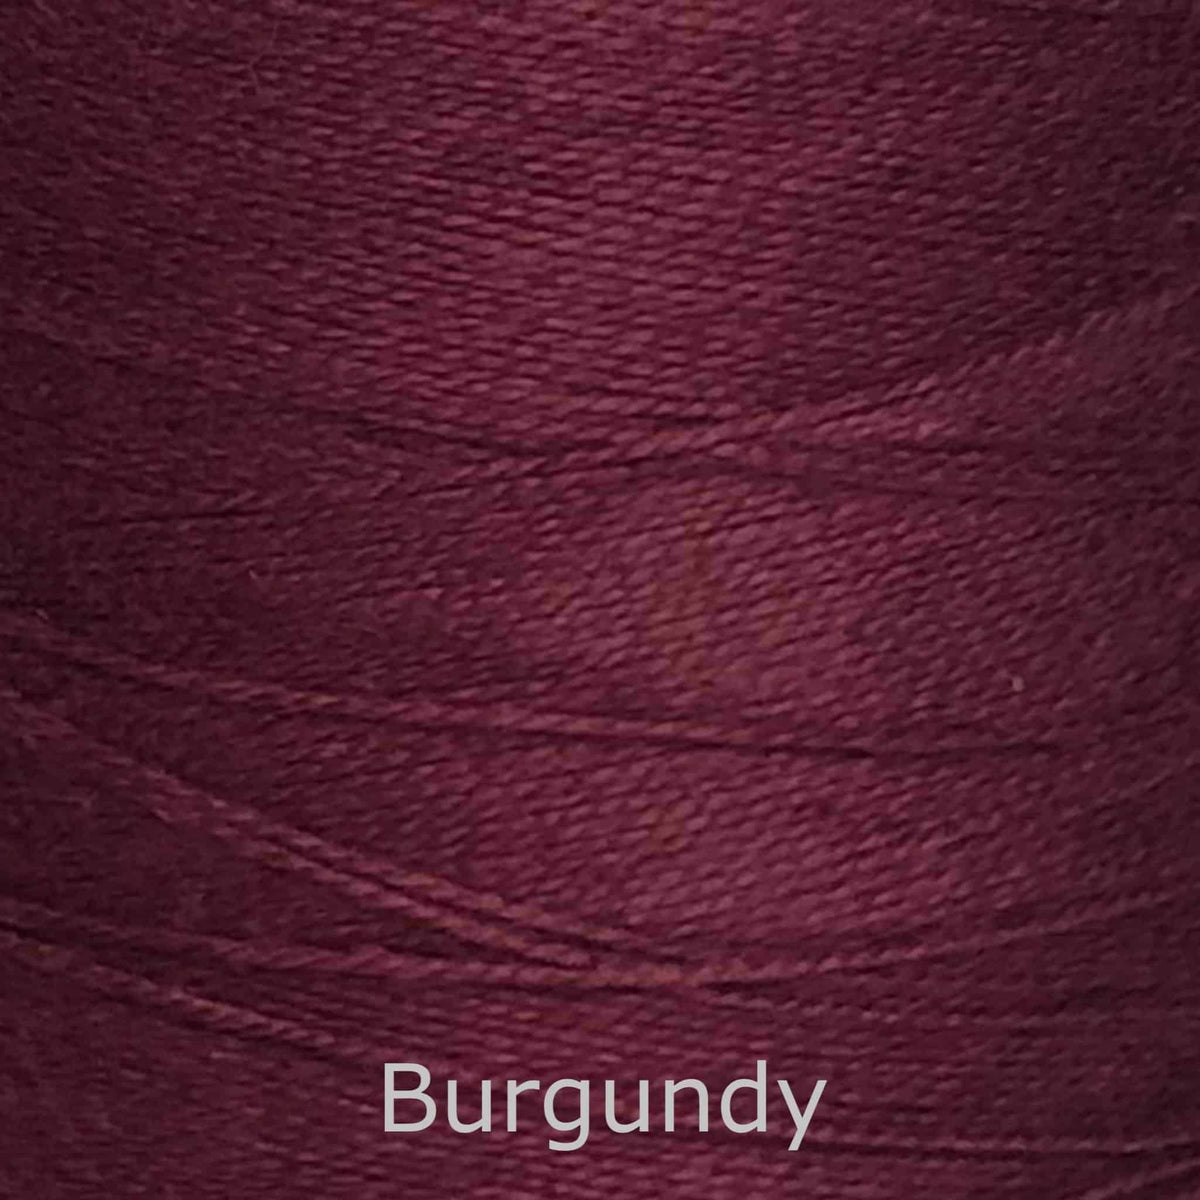 16/2 cotton weaving yarn burgundy 